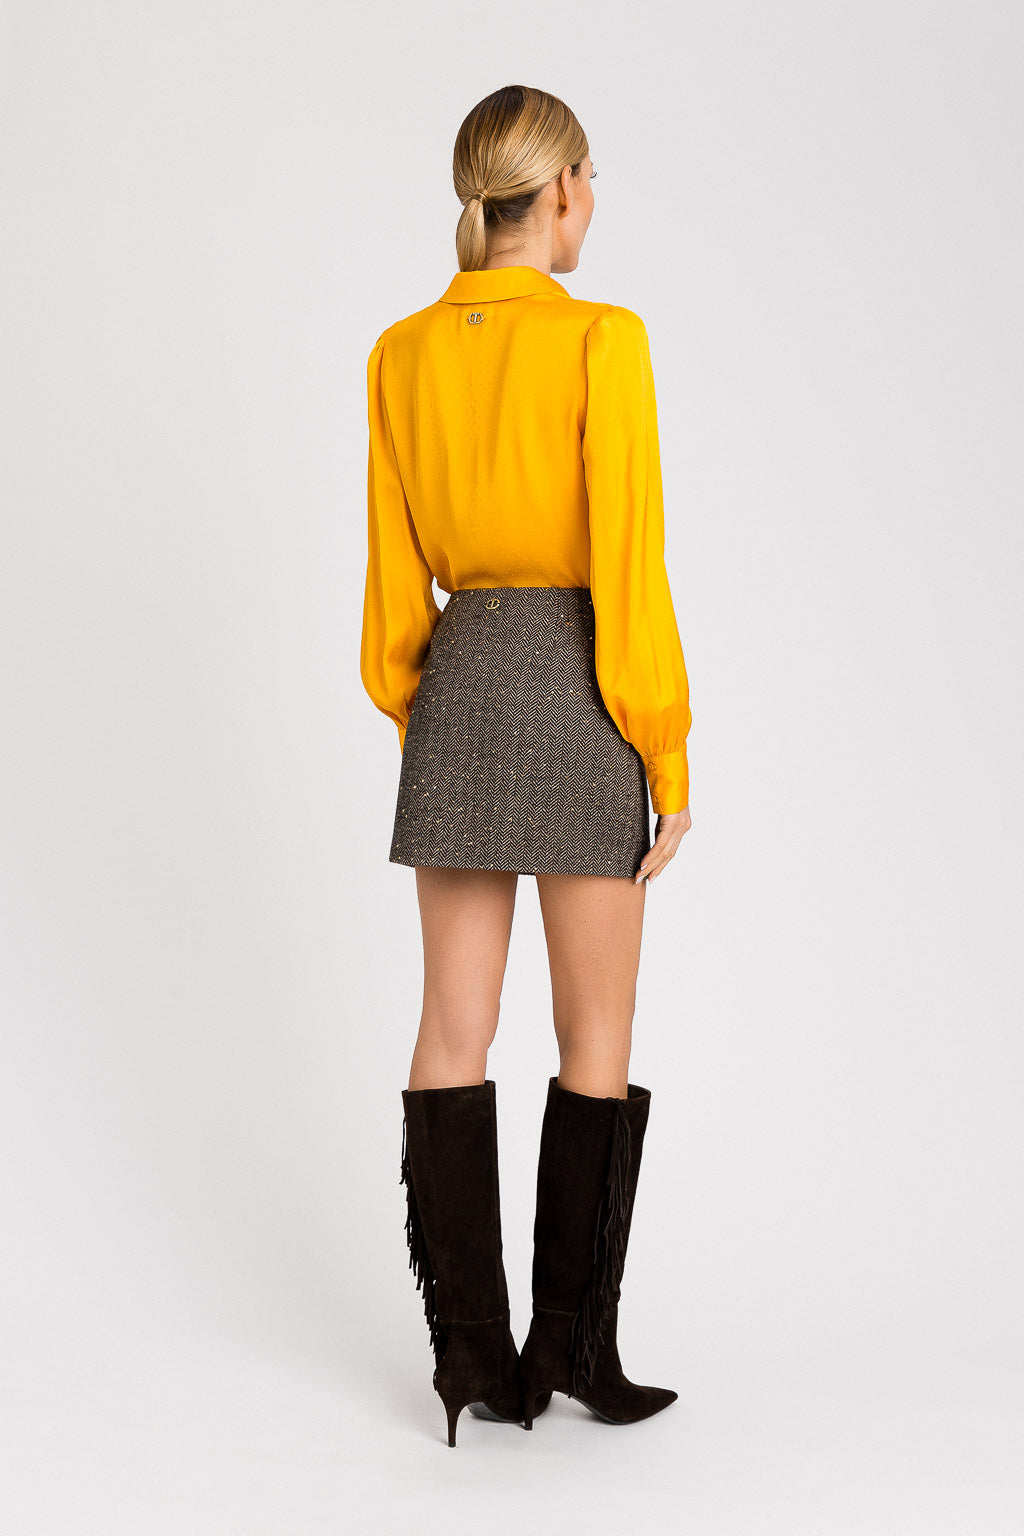 Twinset Brown Chevron Mini Skirt